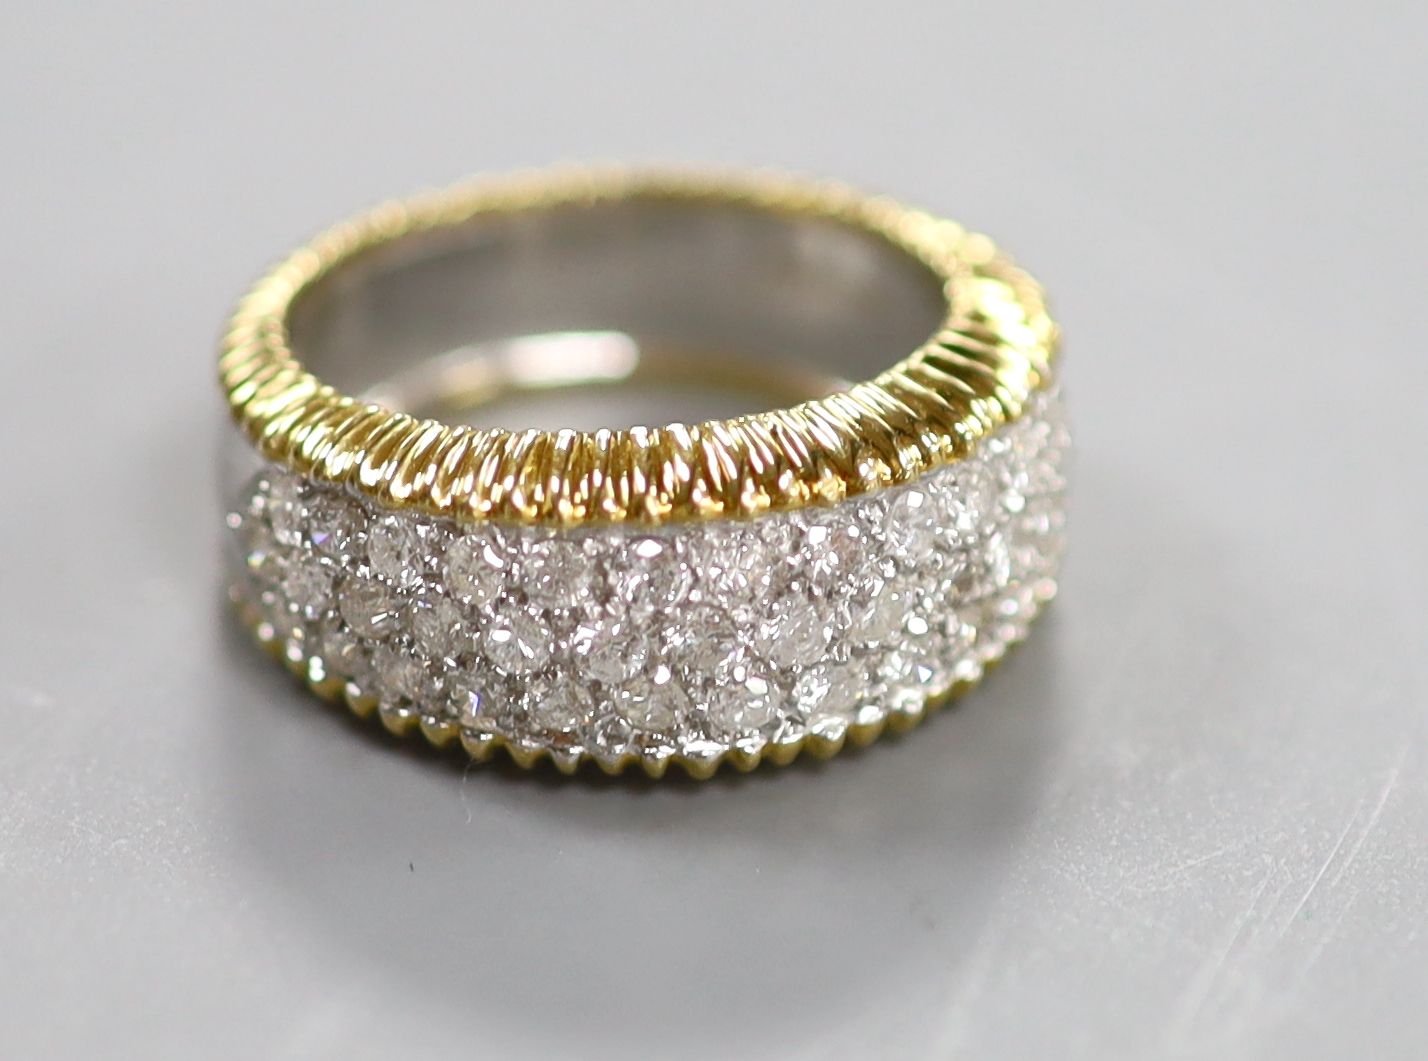 A modern 18ct gold and pave set diamond dress ring